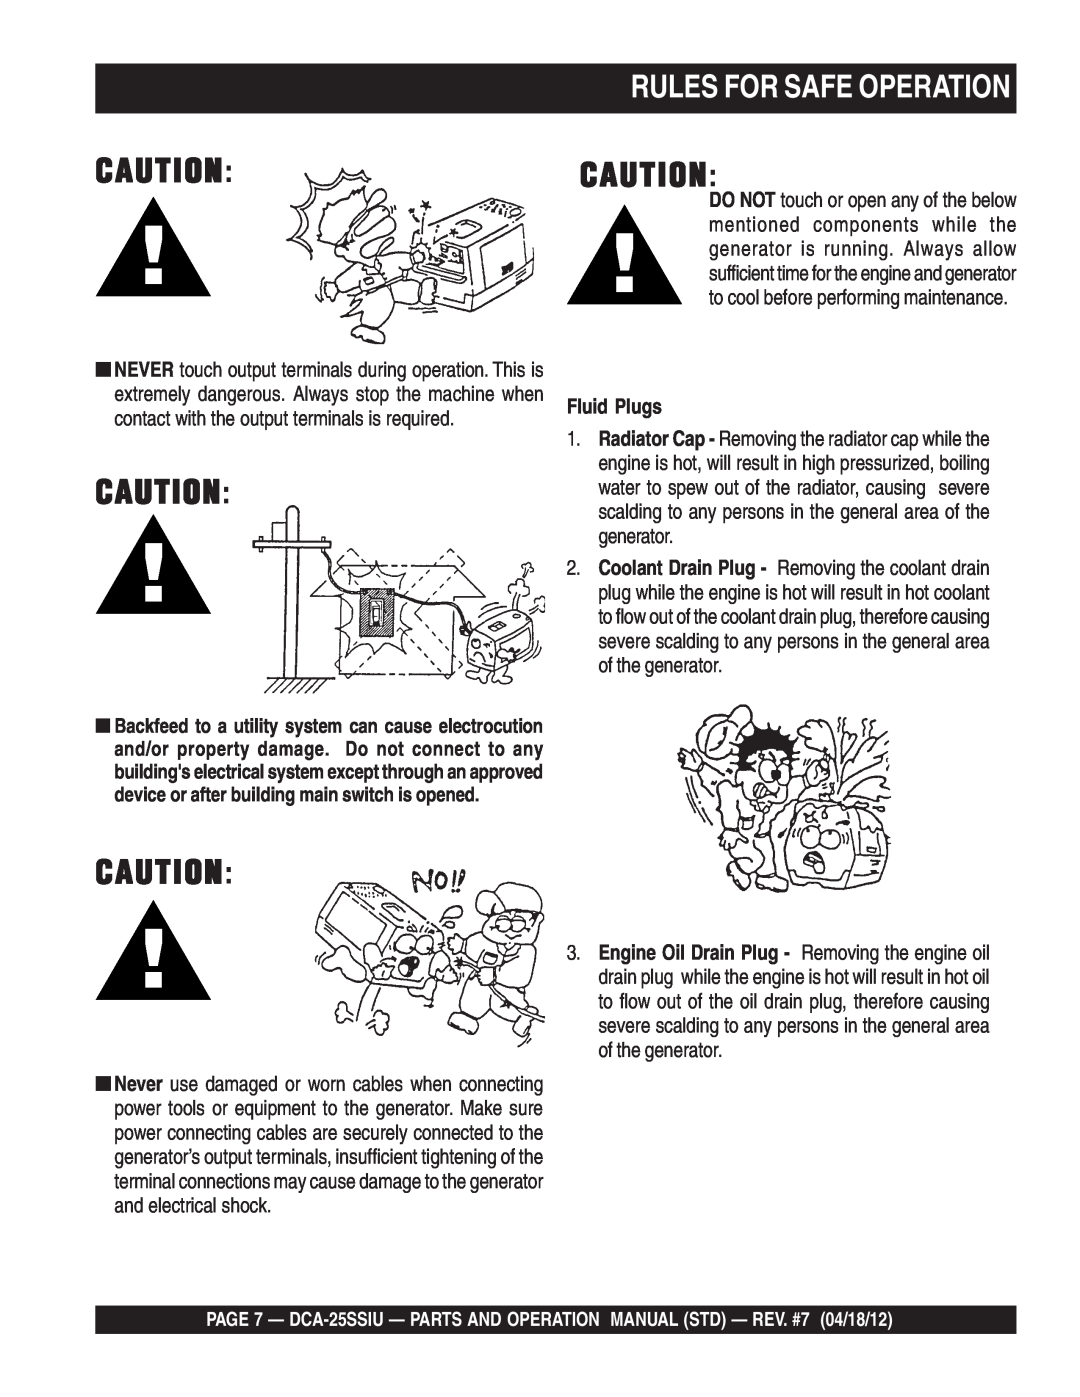 Multiquip DCA25SSIU manual Rules For Safe Operation, Fluid Plugs 